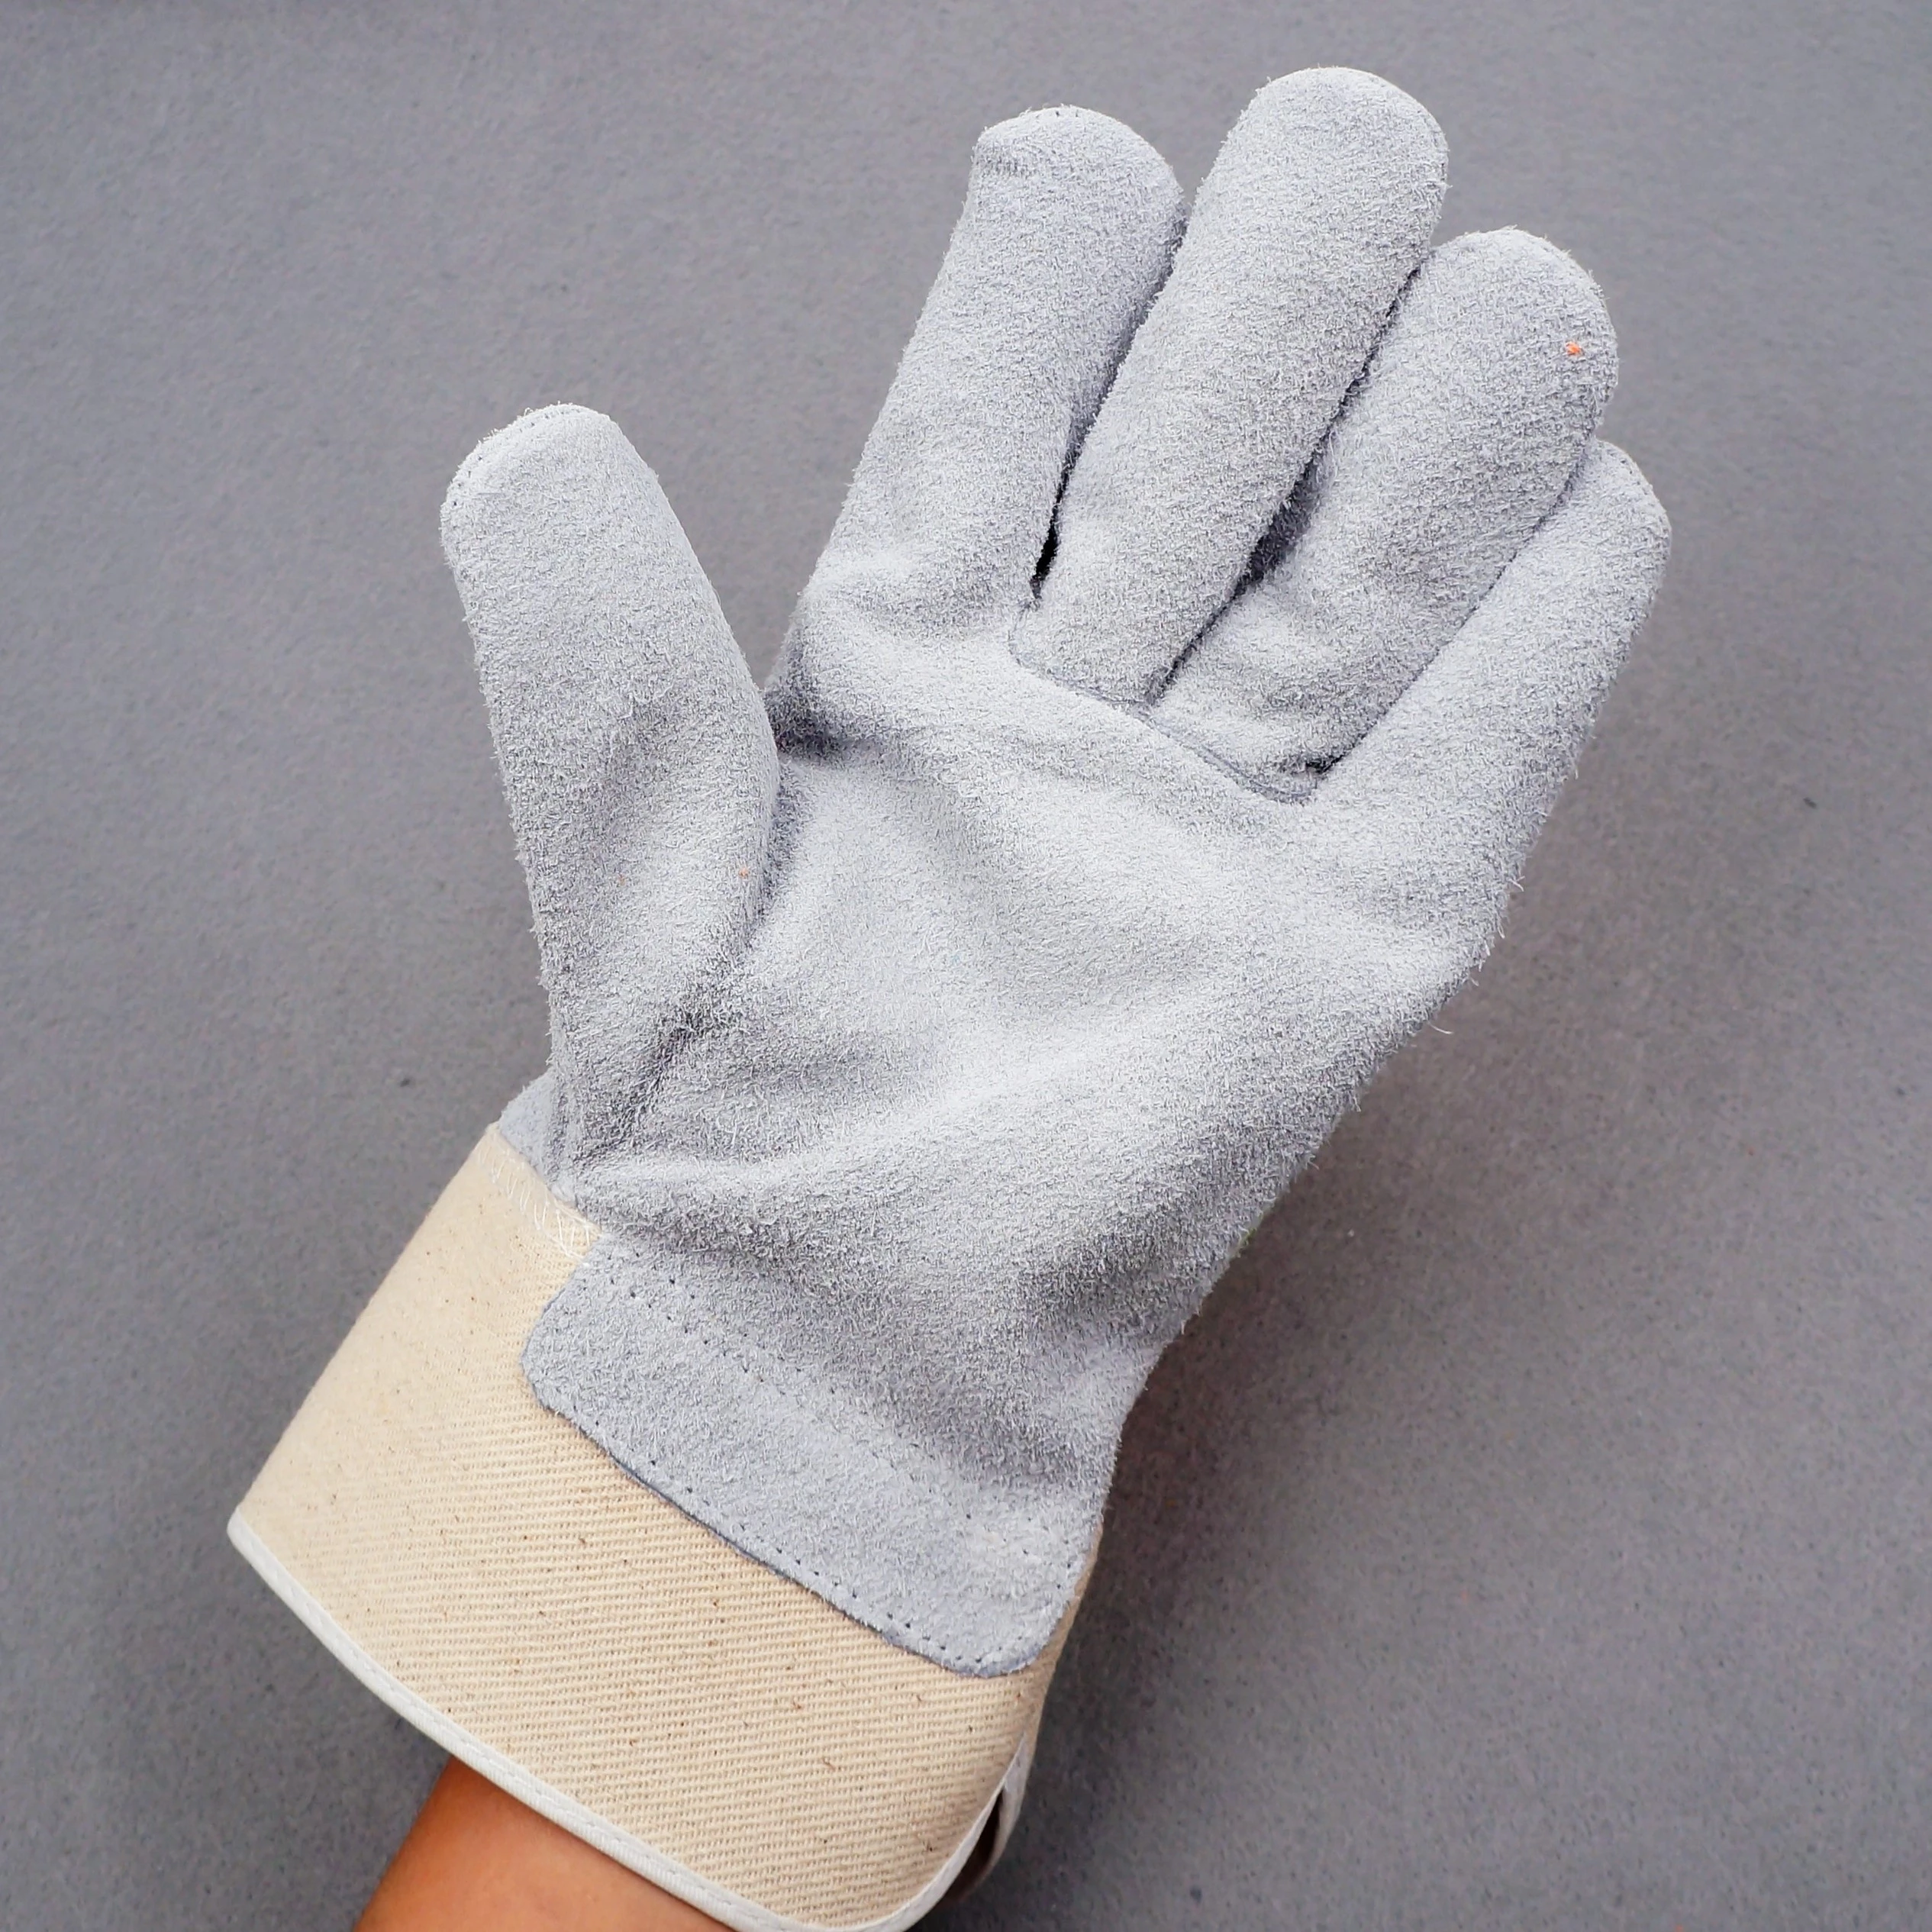 GLOVEMAN HI-VIS Rigger Suede Cowhide leather safety gloves/ Reflective working gloves/Safety gloves